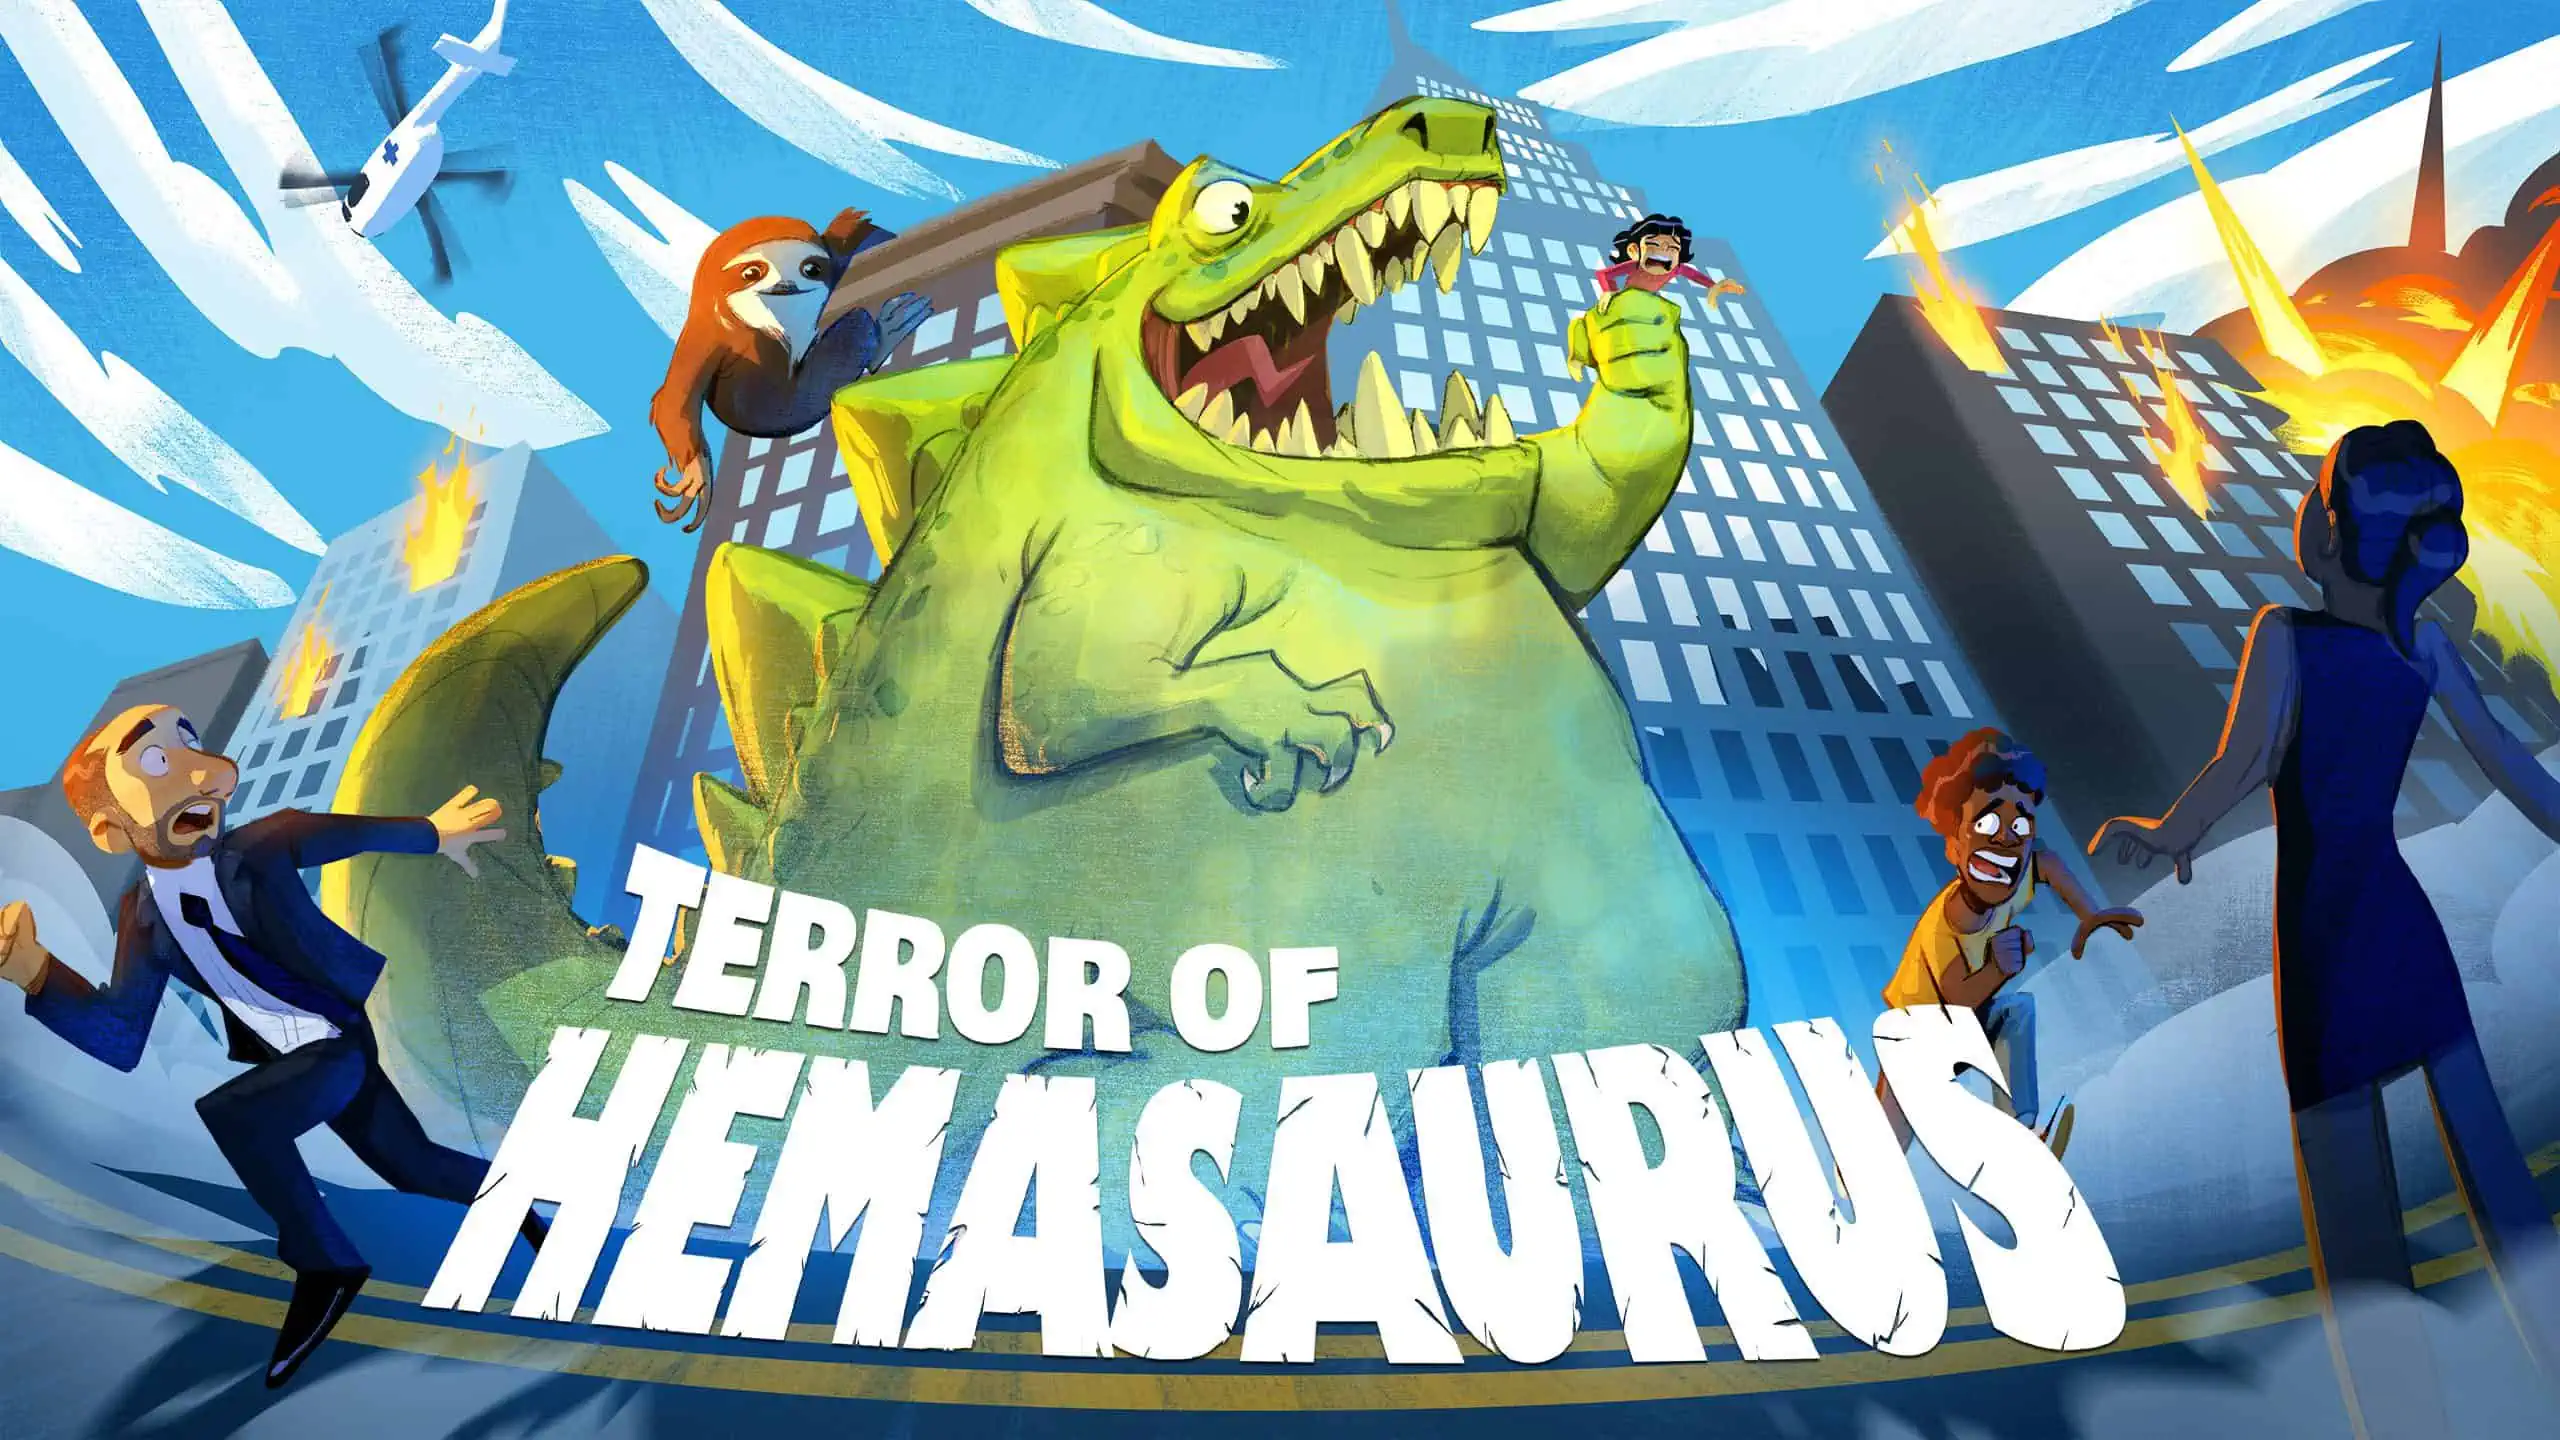 terror of the hemsaurus game poster